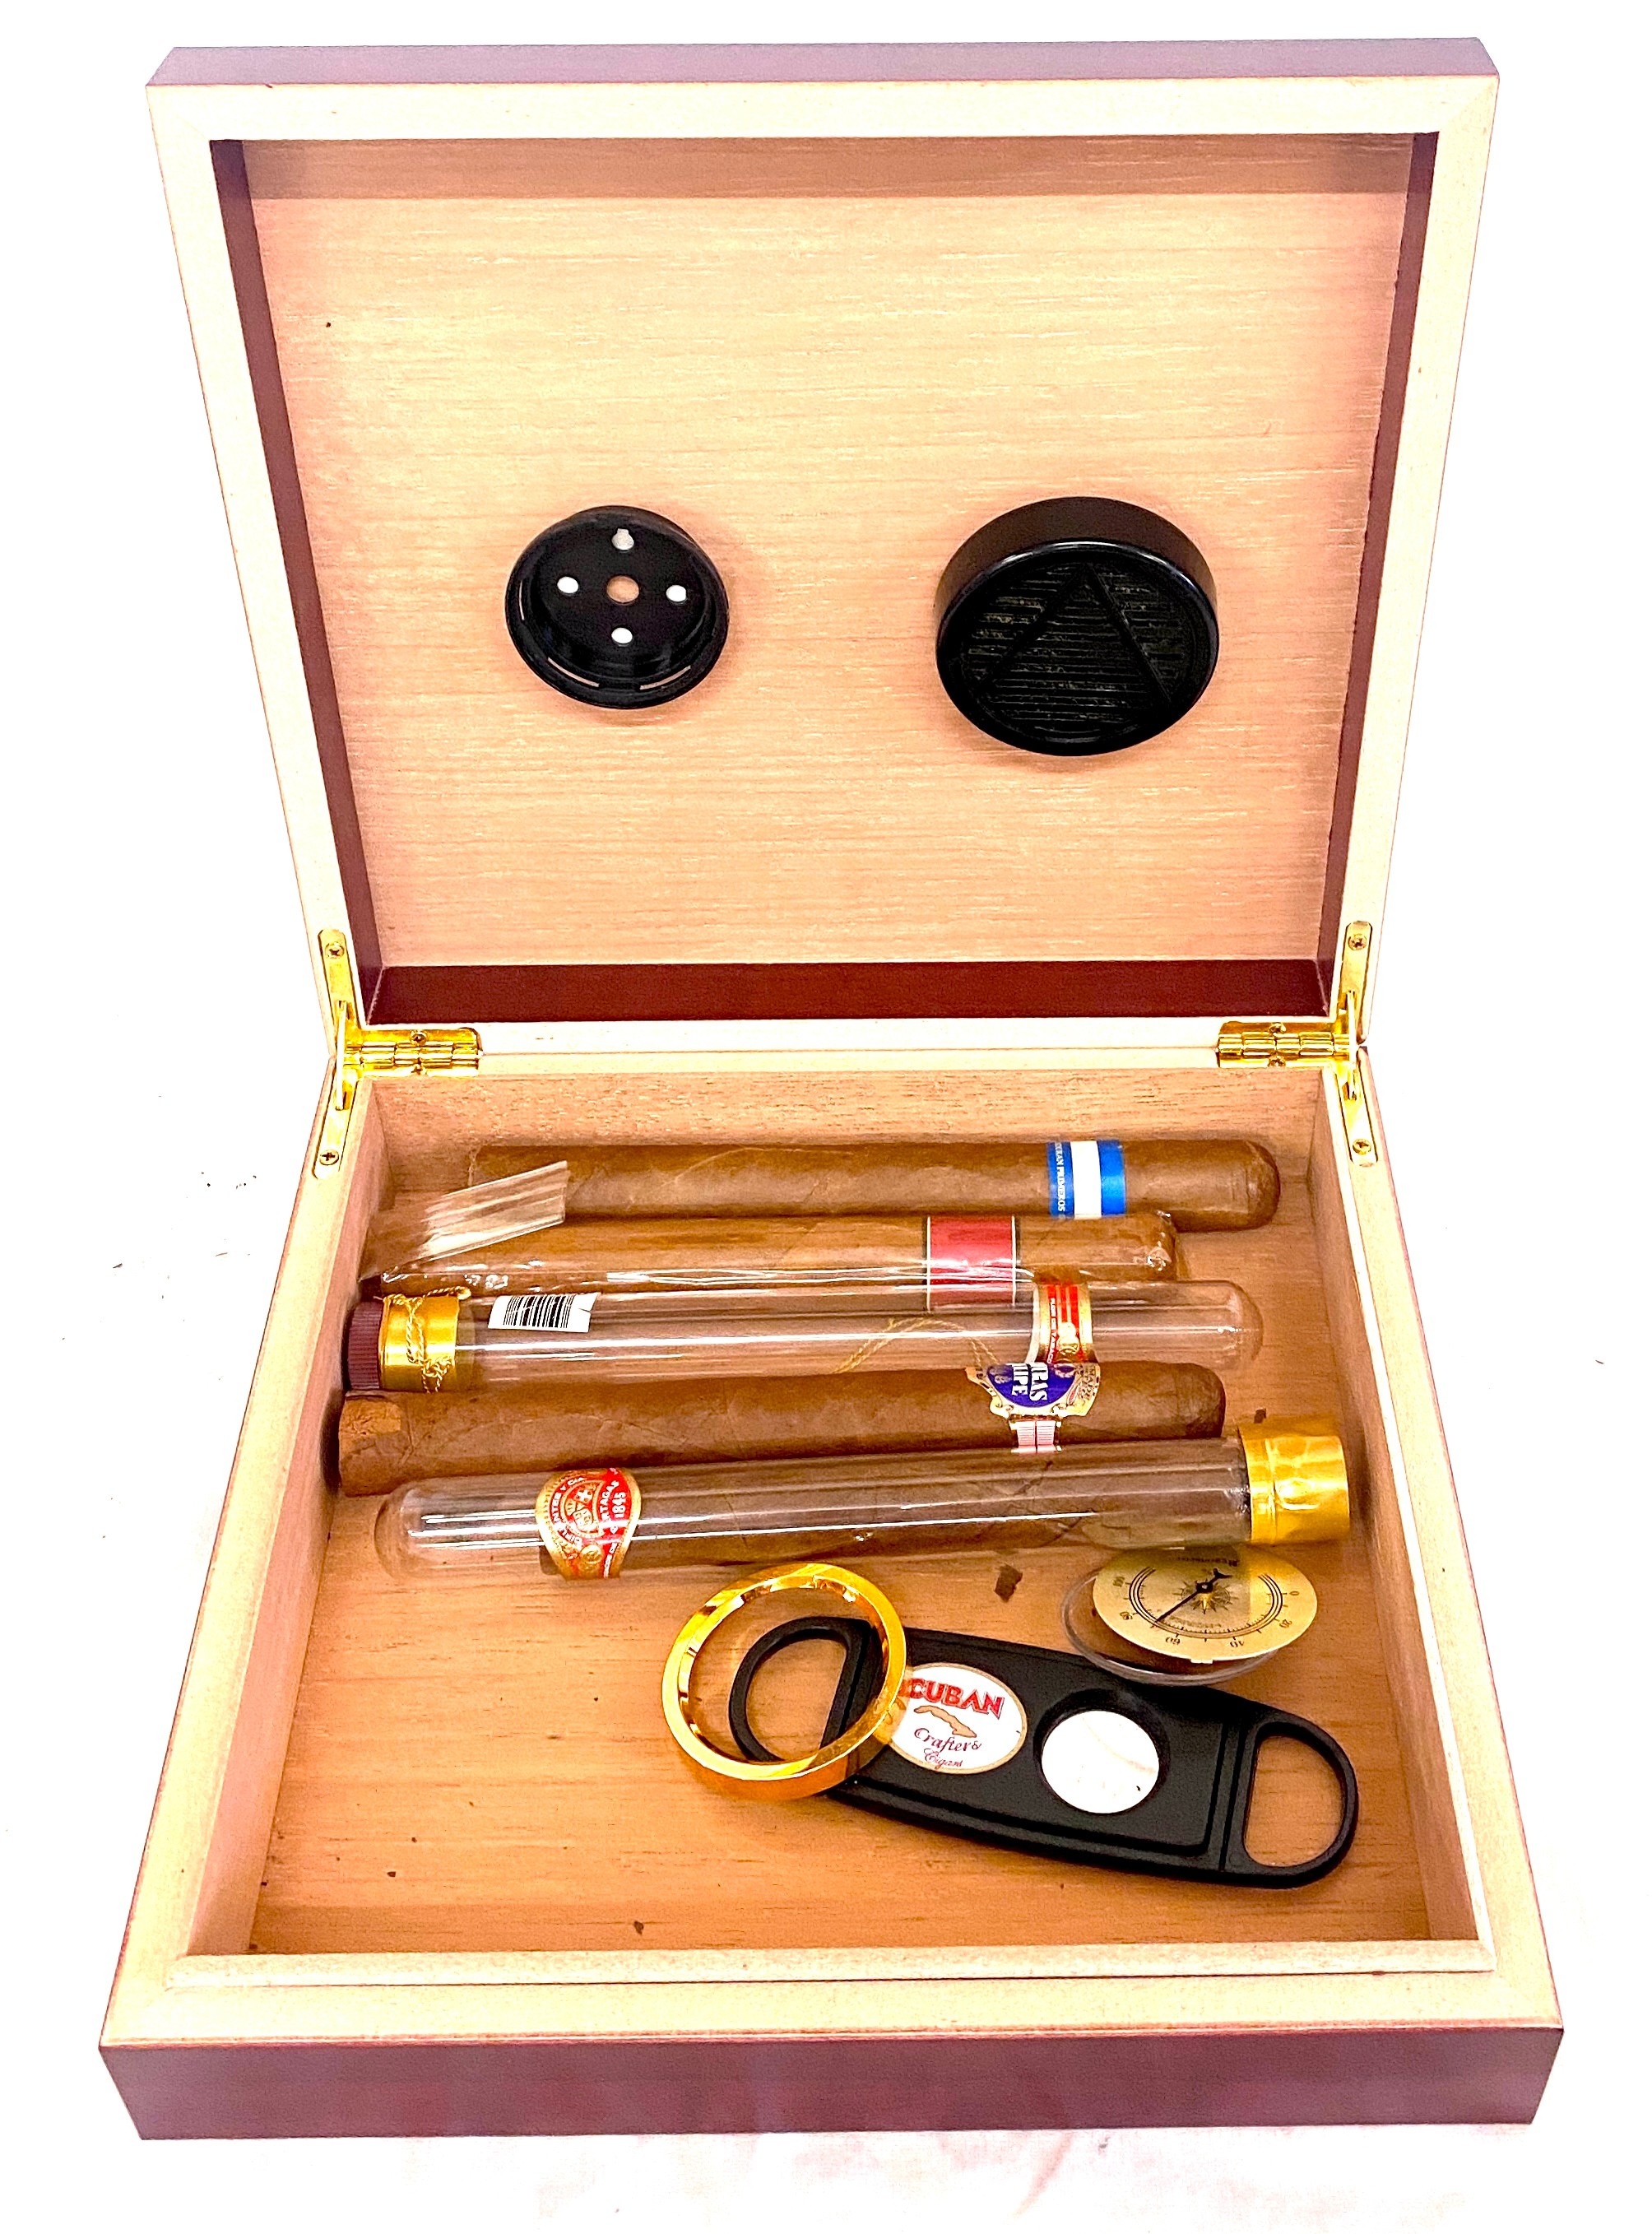 Humador and selection of cigars